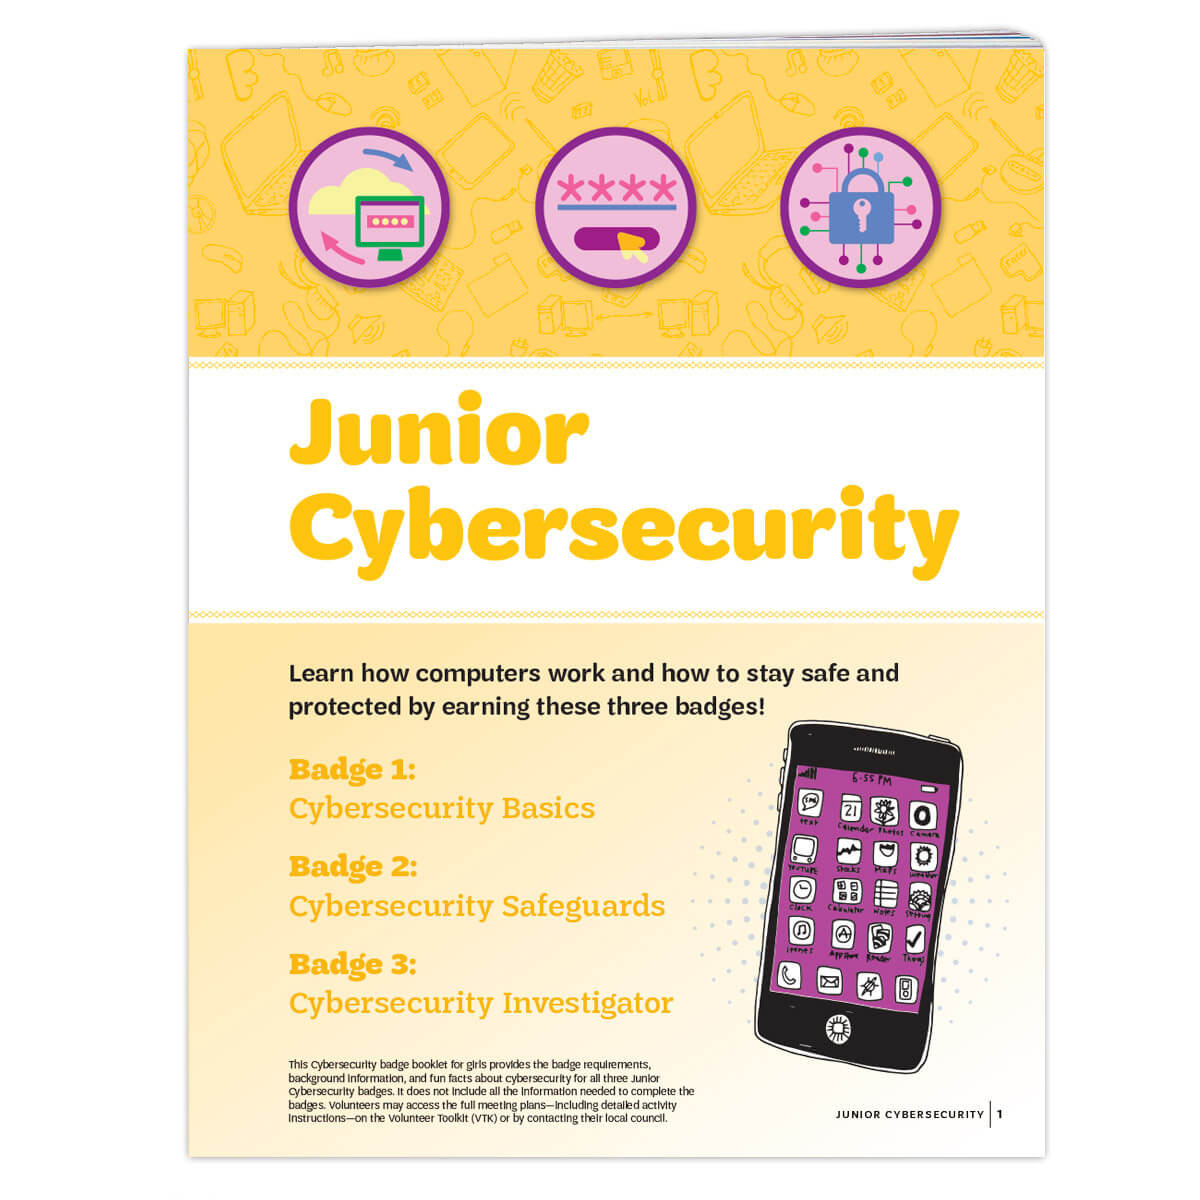 Jr. Cybersecurity REQ